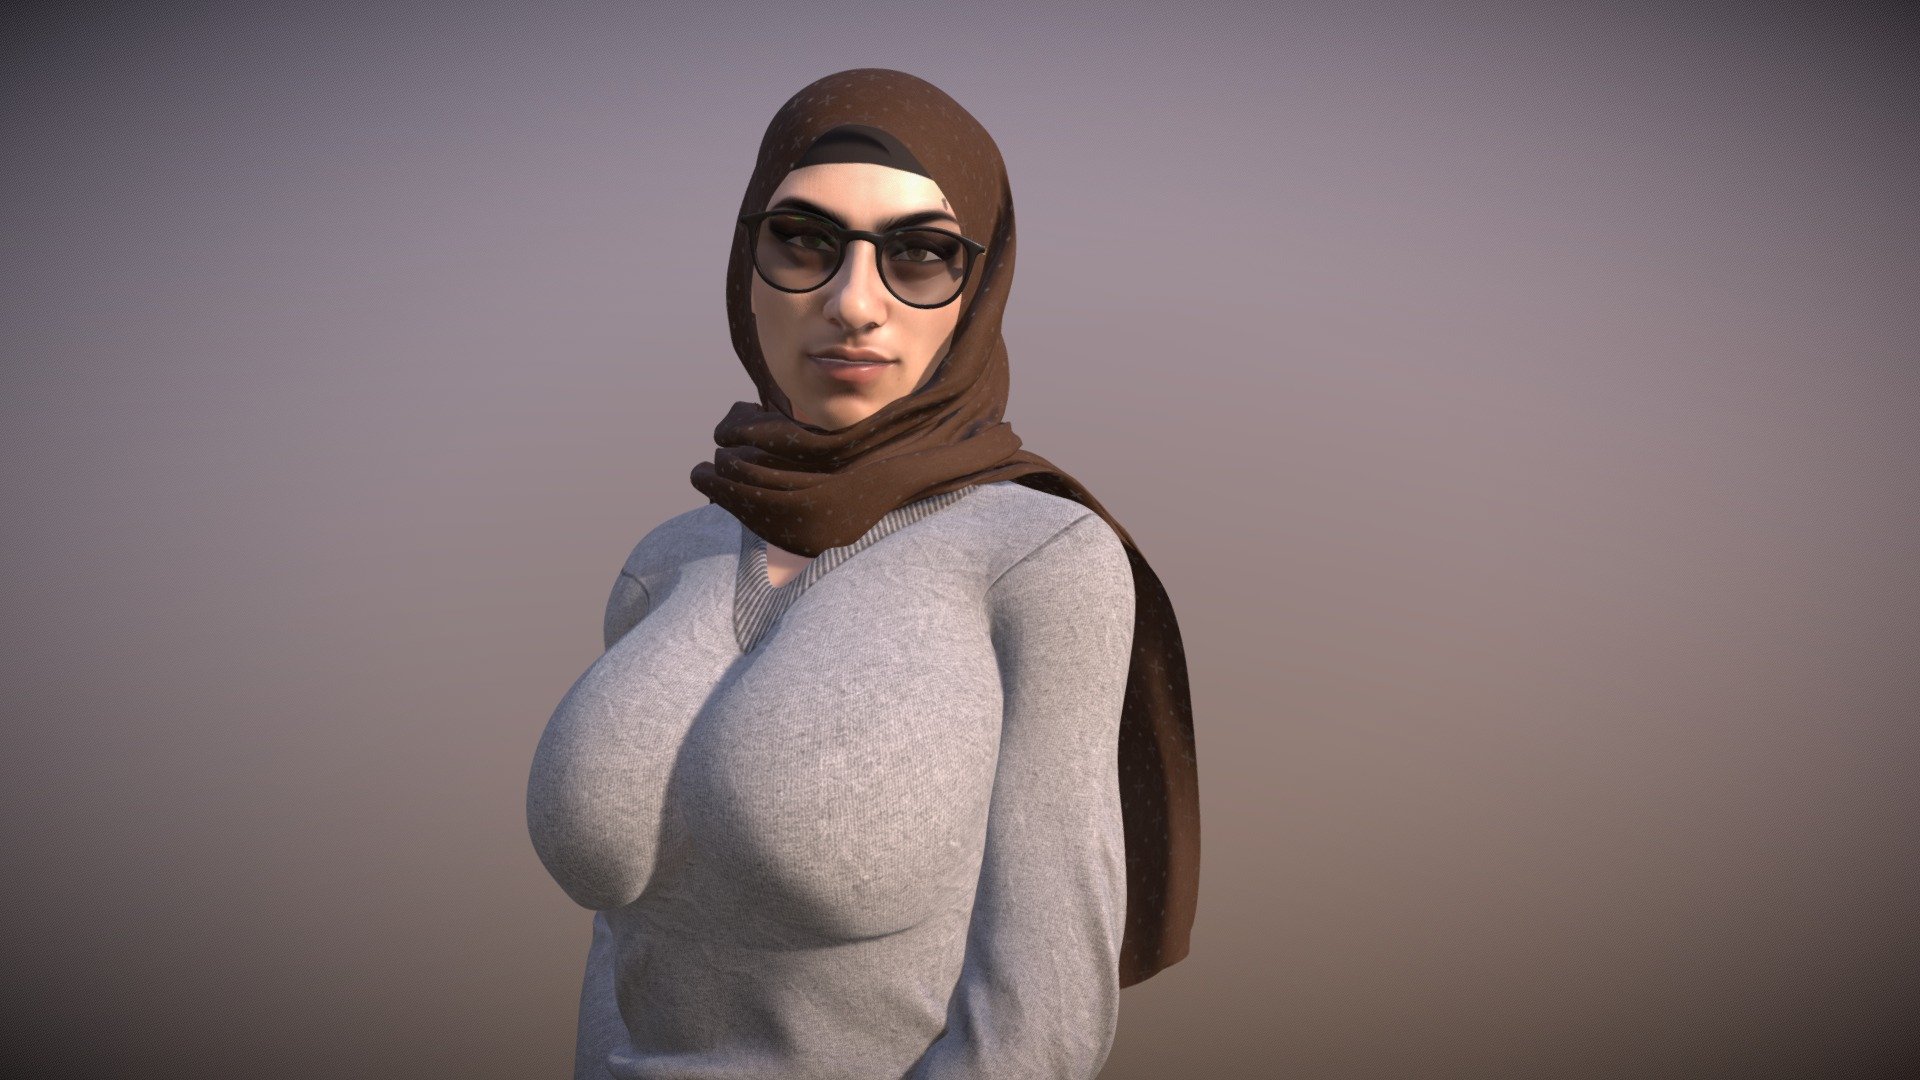 andrew treverton add photo mia khalifa with hijab